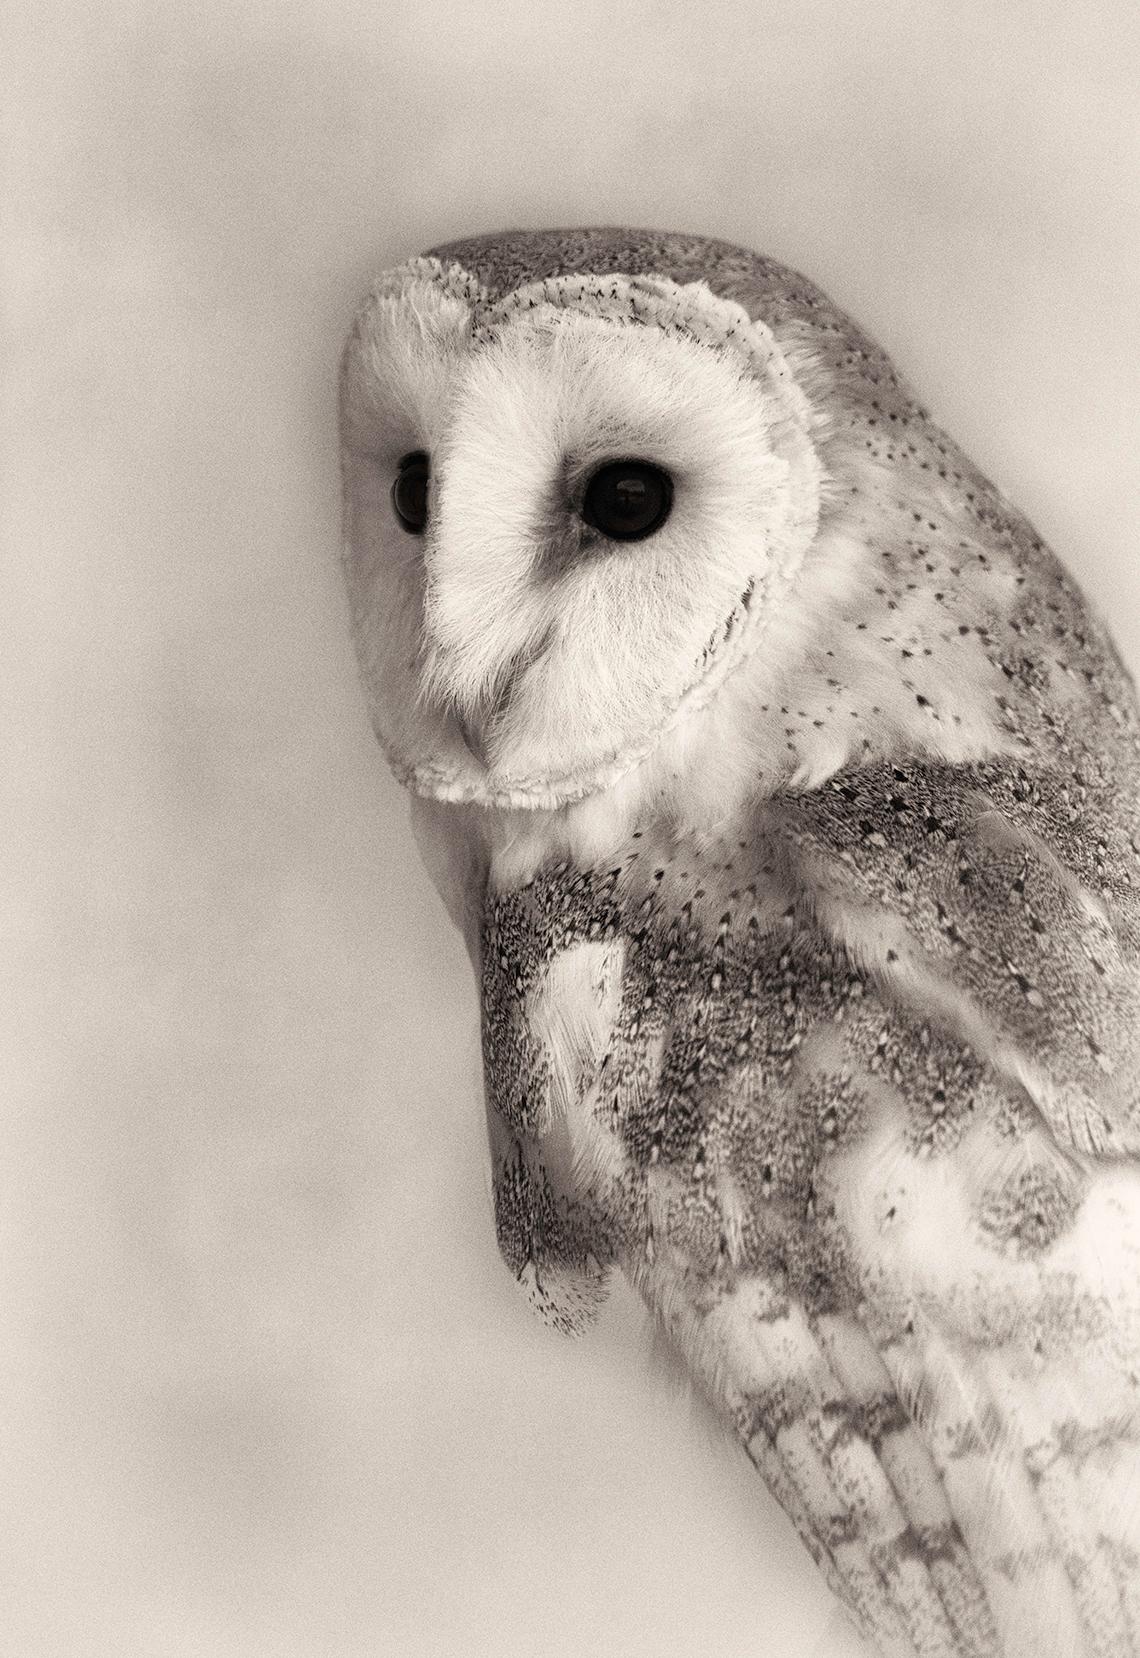 Animal Print Beth Moon - Barn Owl Portrait, limited edition photograph, signed, Platinum/Palladium Print